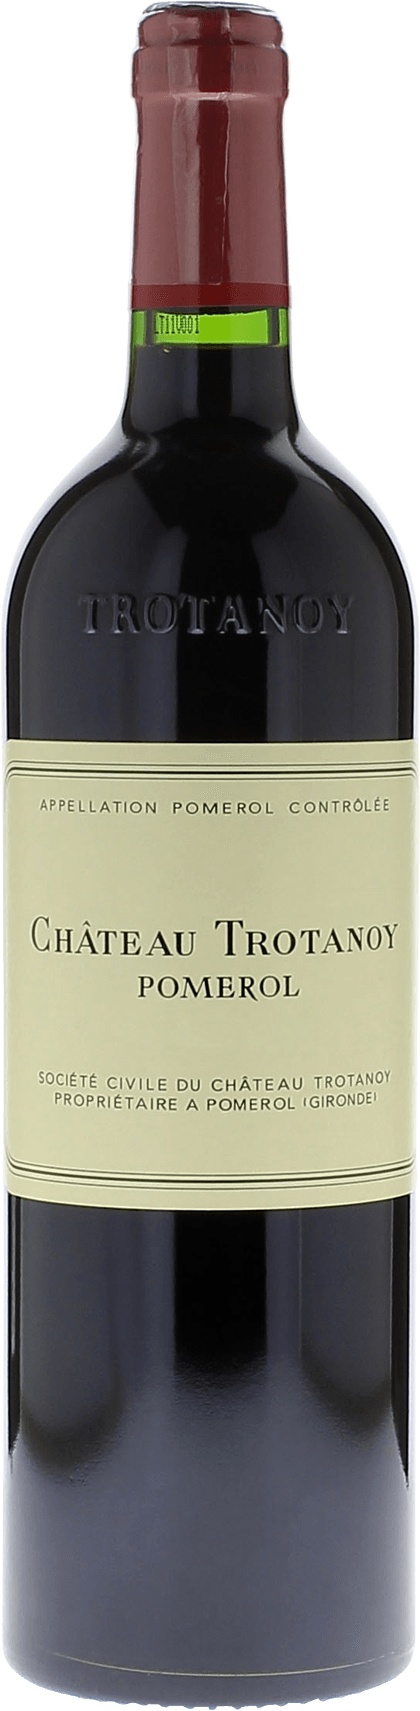 Trotanoy 2010  Pomerol, Bordeaux rouge